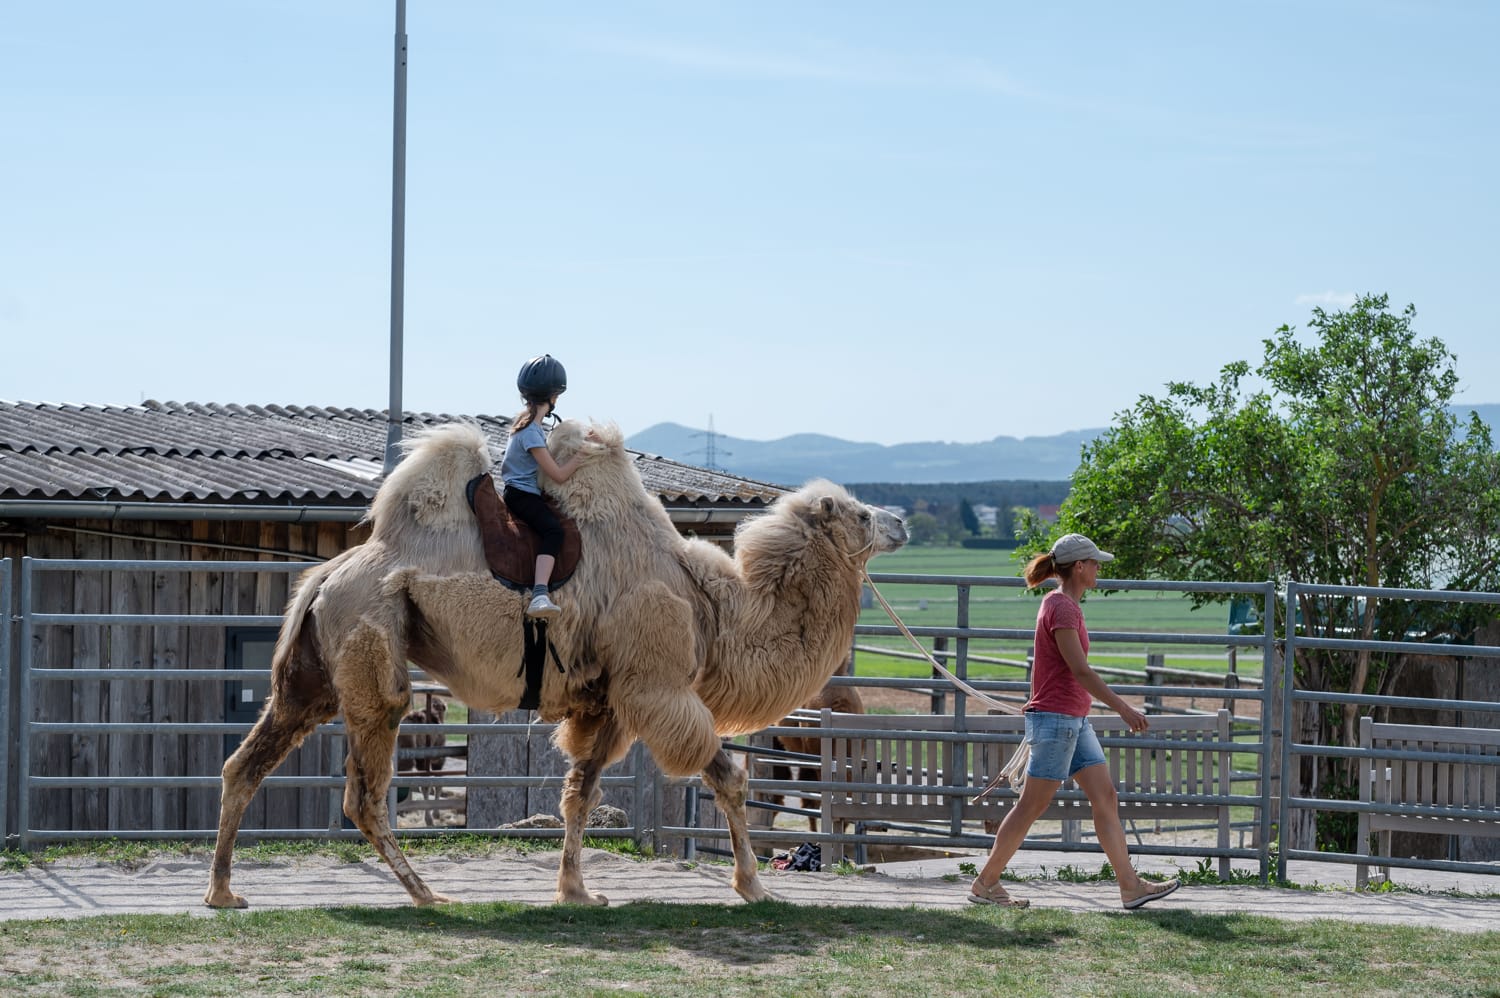 Kind reitet am Kamel, Würflach Kamelfarm